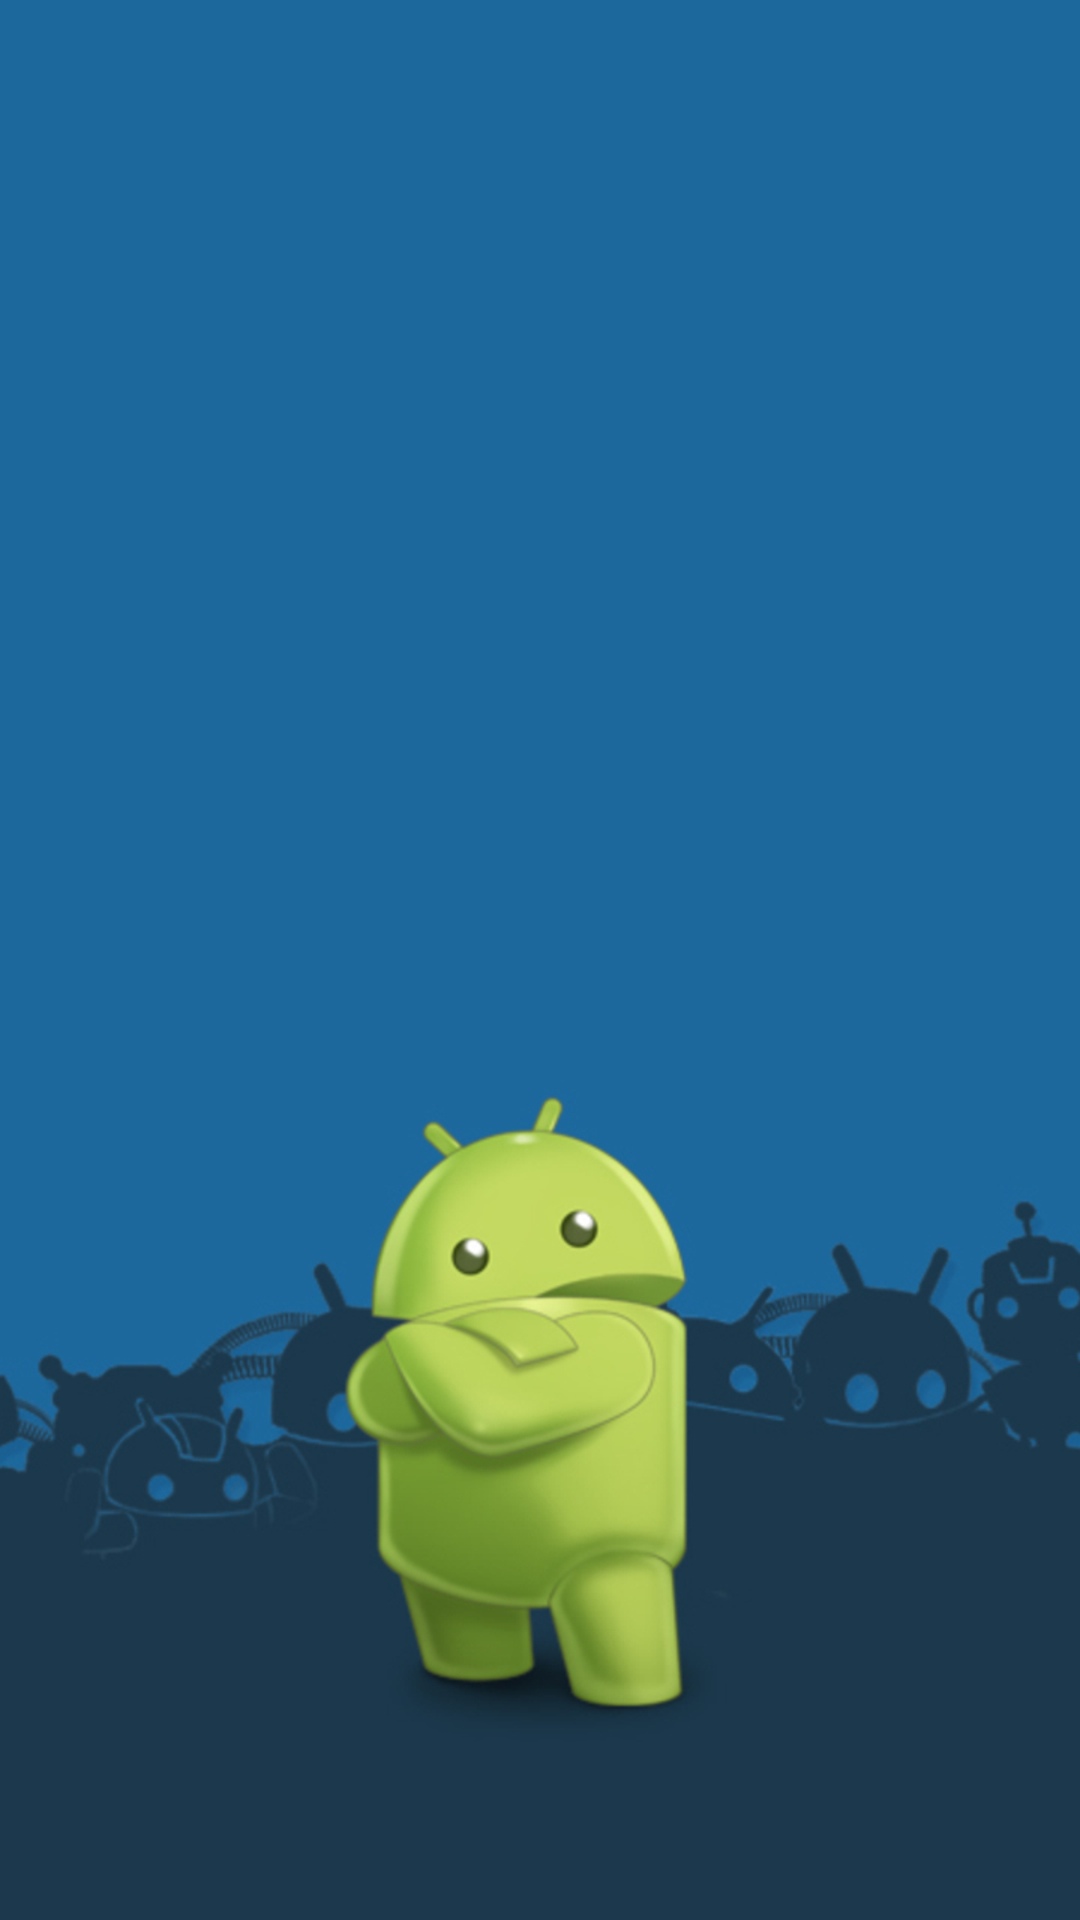 fondos de pantalla para teléfono inteligente android,azul,verde,dibujos animados,amarillo,ilustración